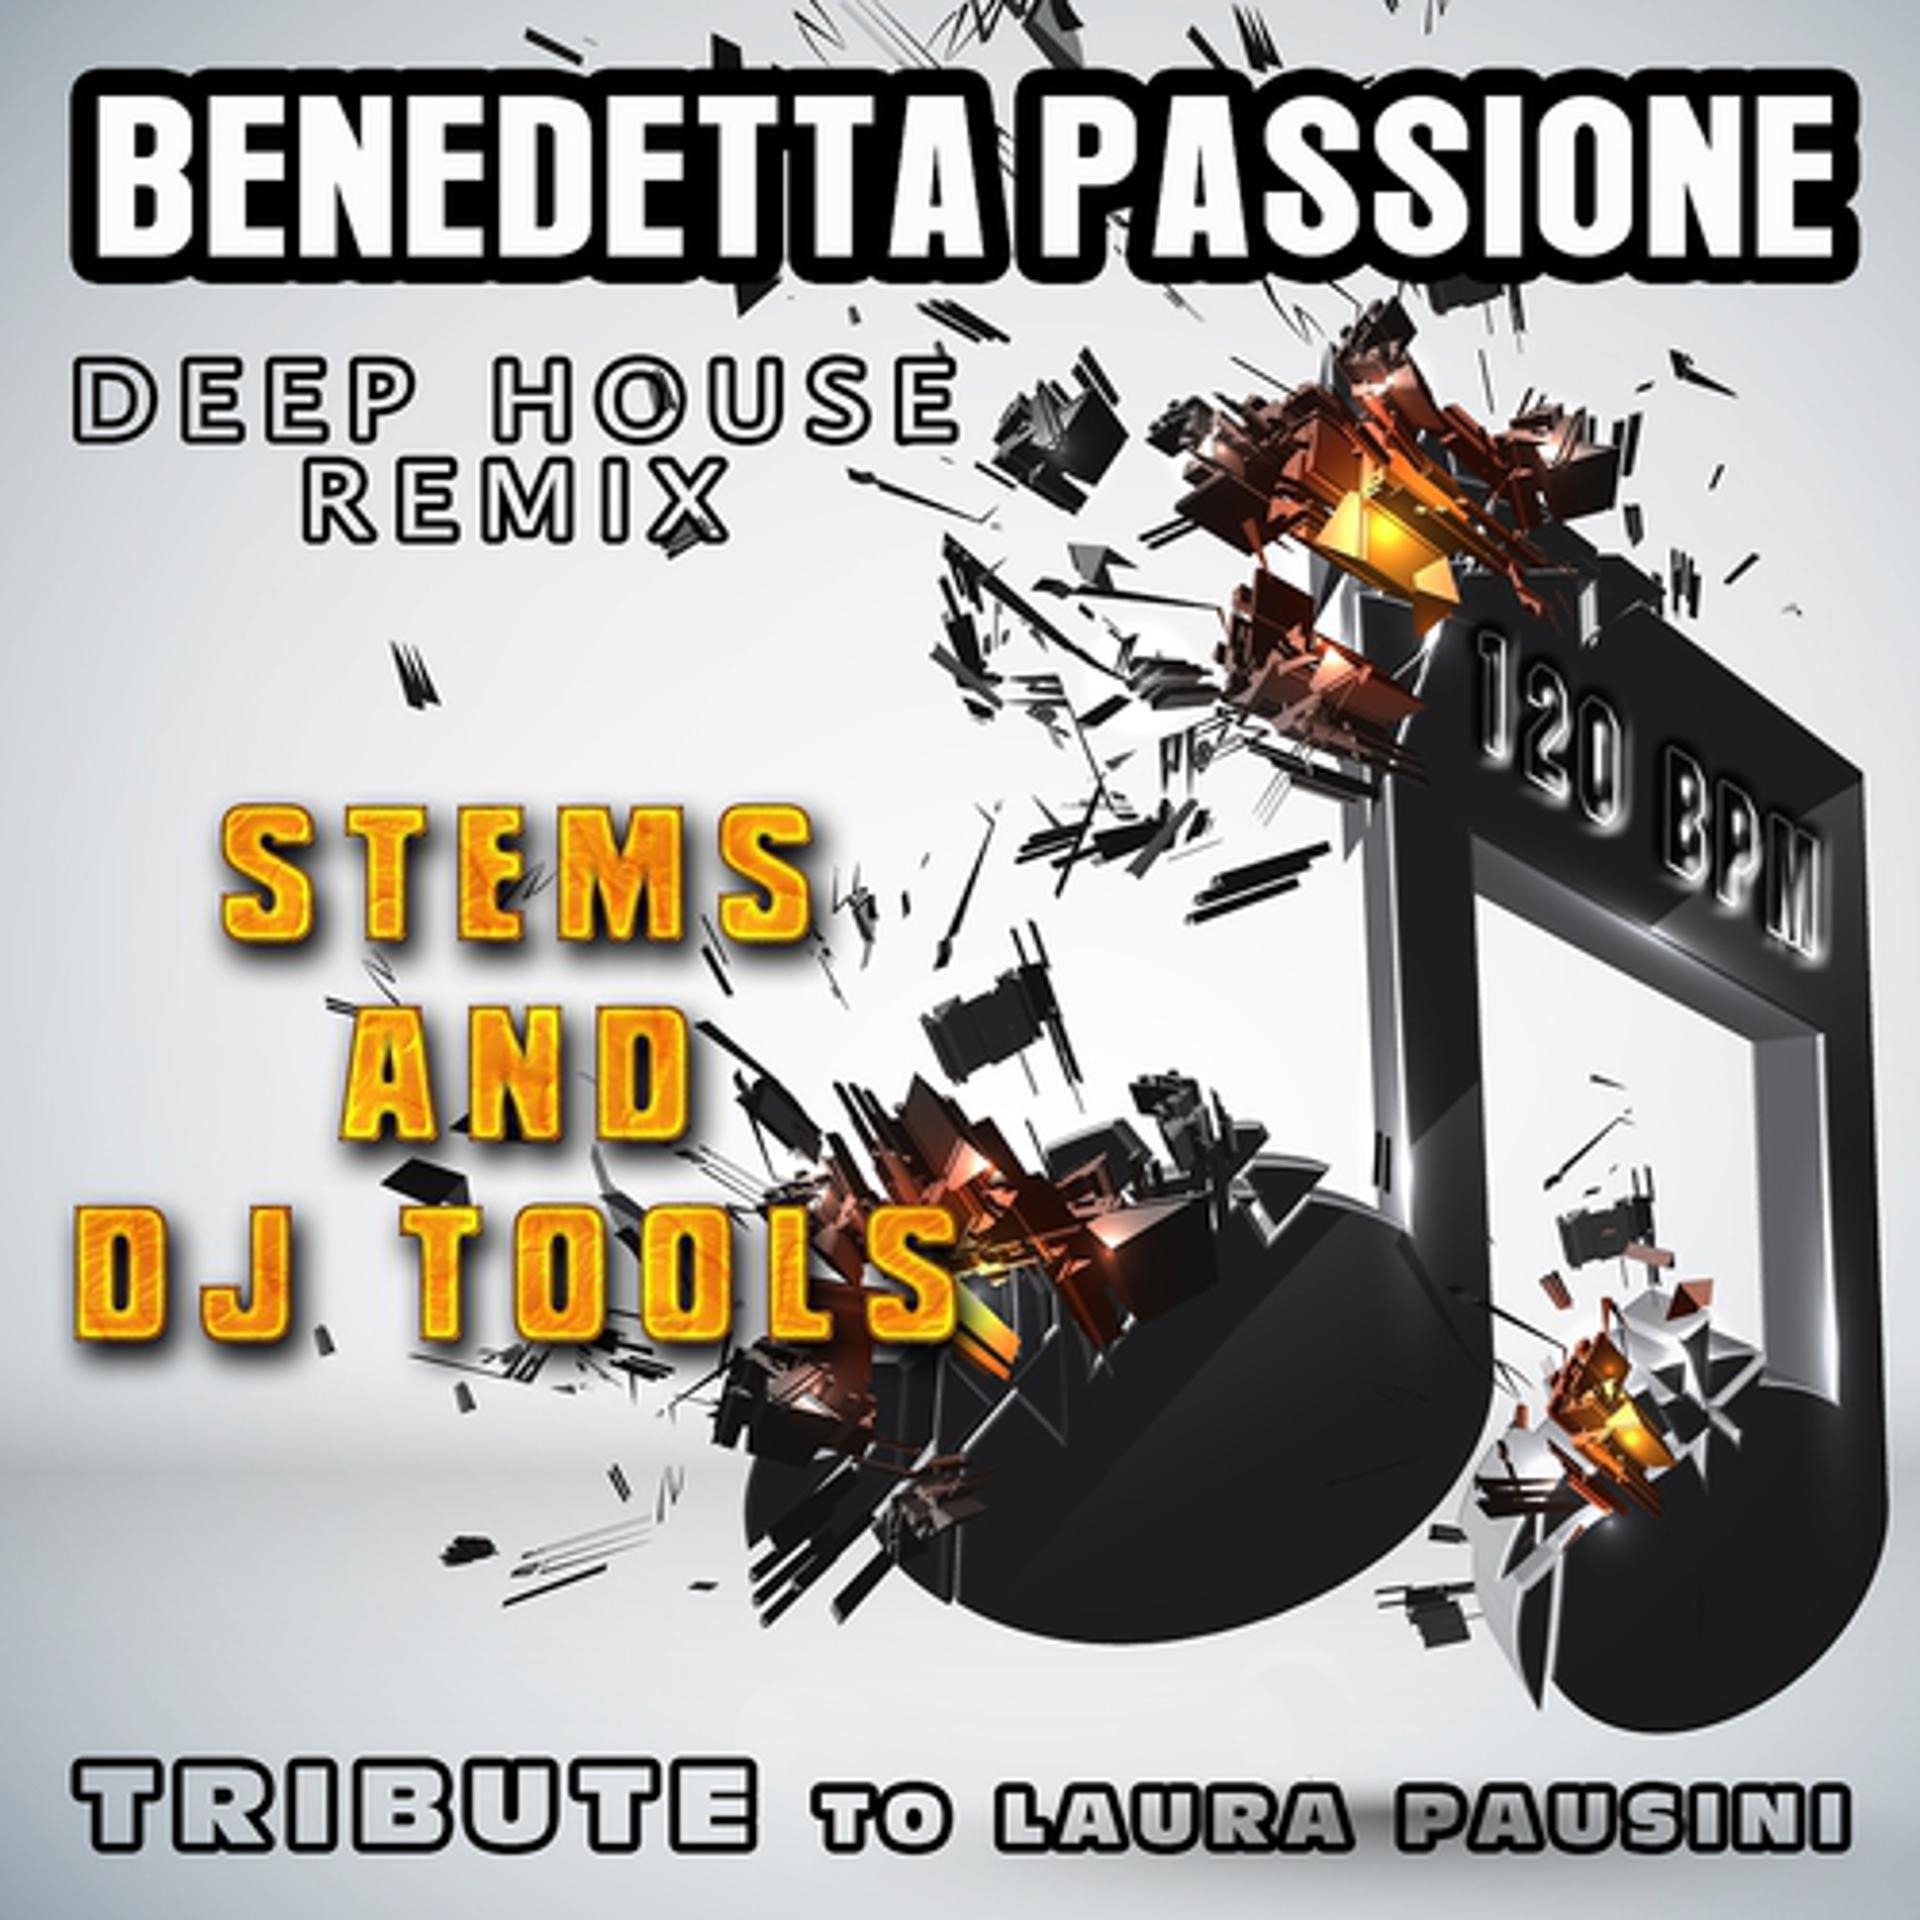 Постер альбома Benedetta passione : Deep House Remix, Stems and DJ Tools, Tribute to Laura Pausini